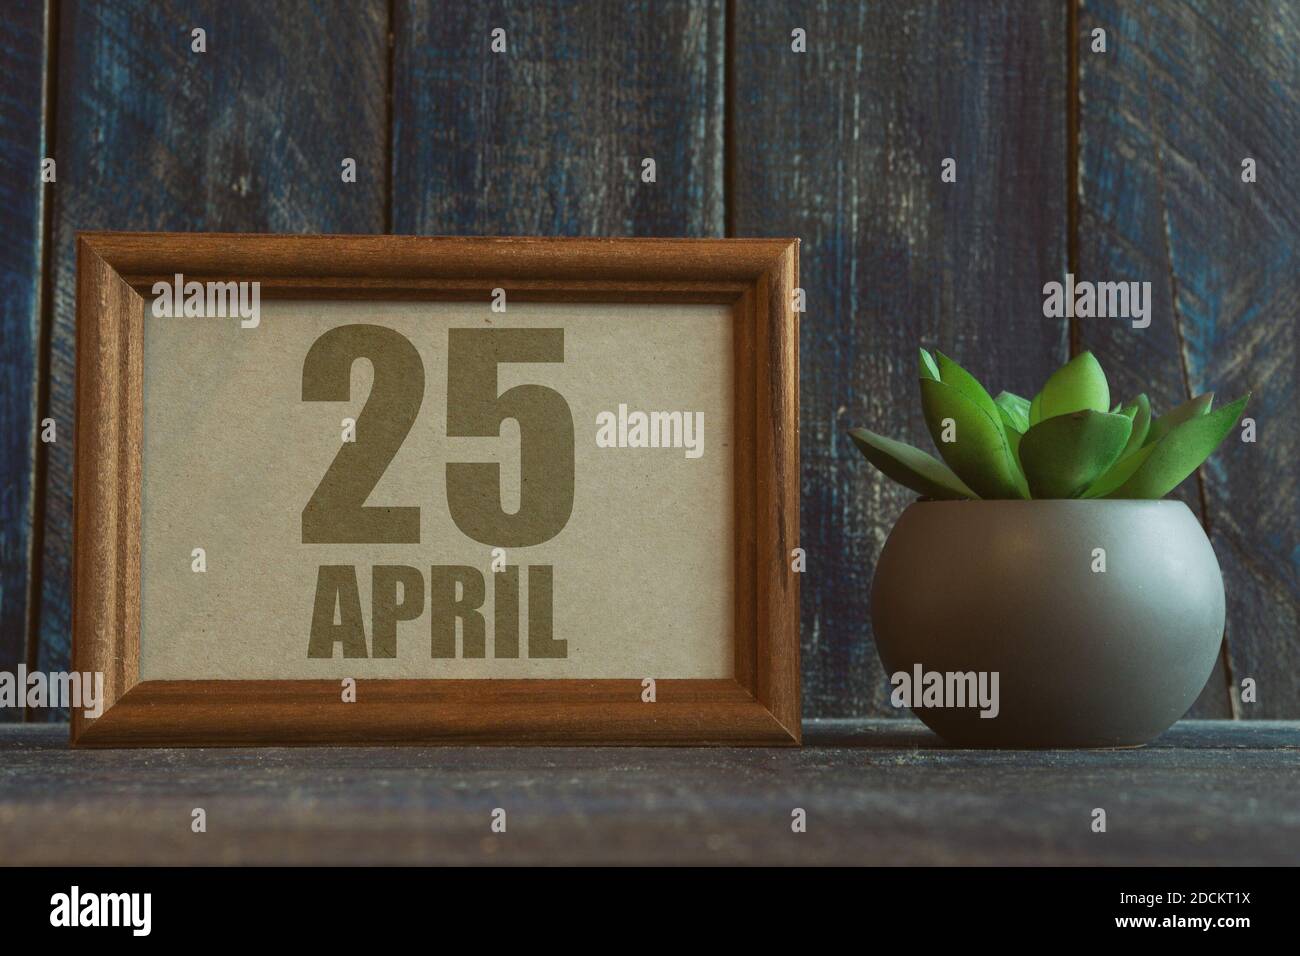 april. Tag 25 des Monats, Datum im Rahmen neben Sukkulente auf hölzernen Hintergrund Frühlingsmonat, Tag des Jahres Konzept. Stockfoto